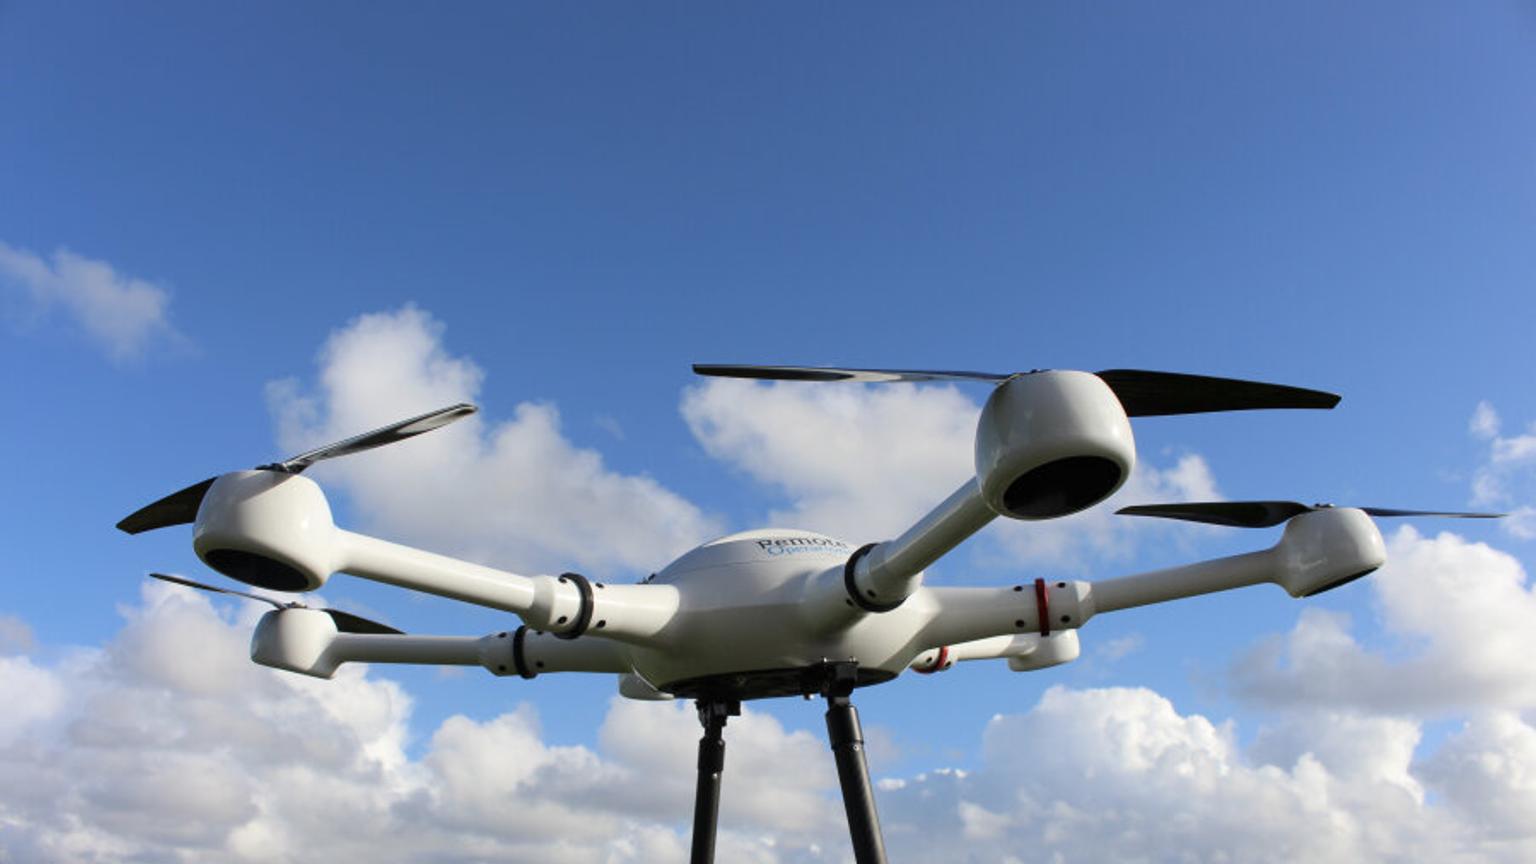 Remote Operations drone